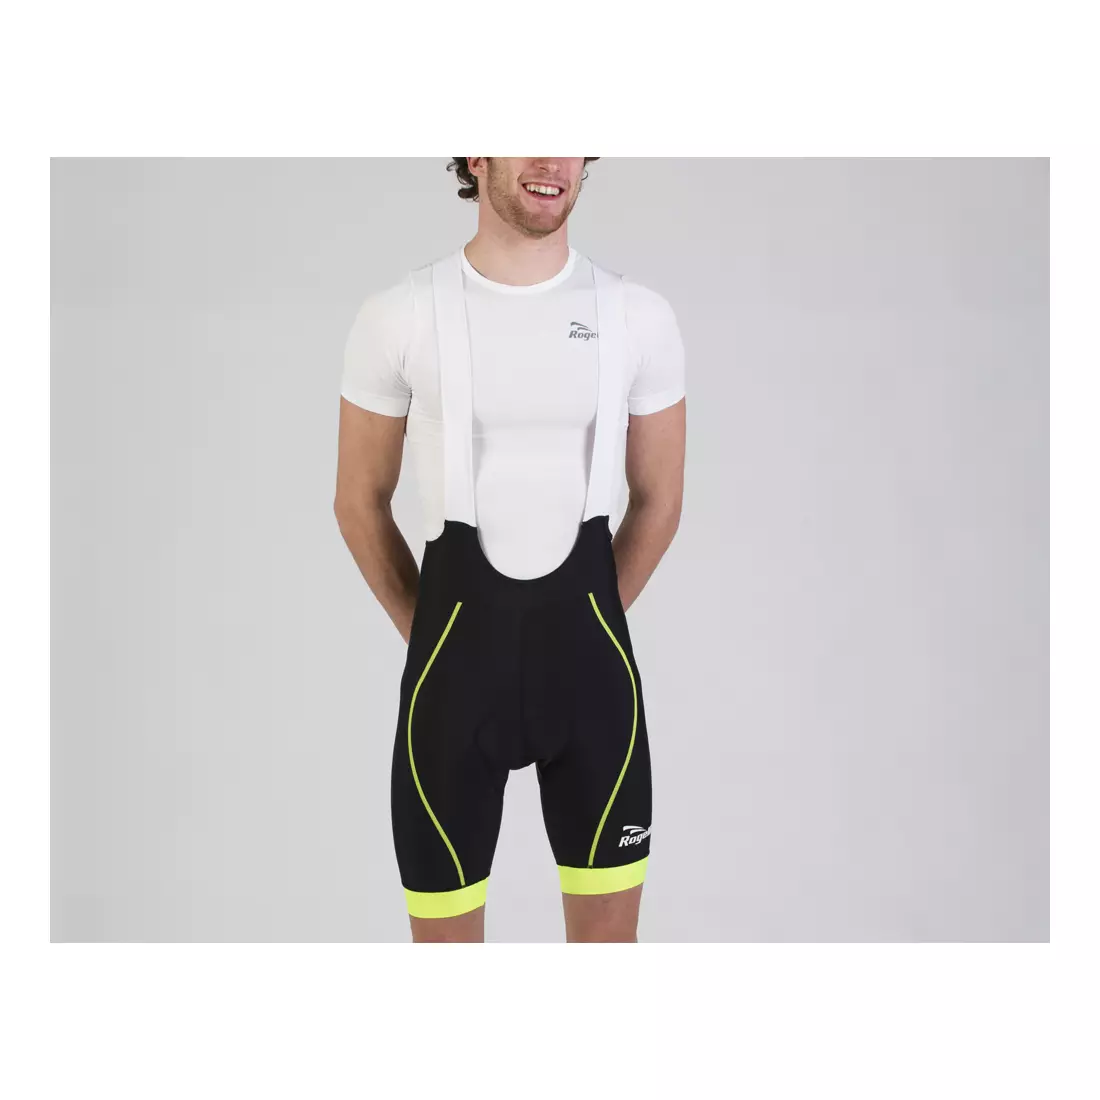 ROGELLI PORRENA 2.0 men's cycling shorts, harness, fluor